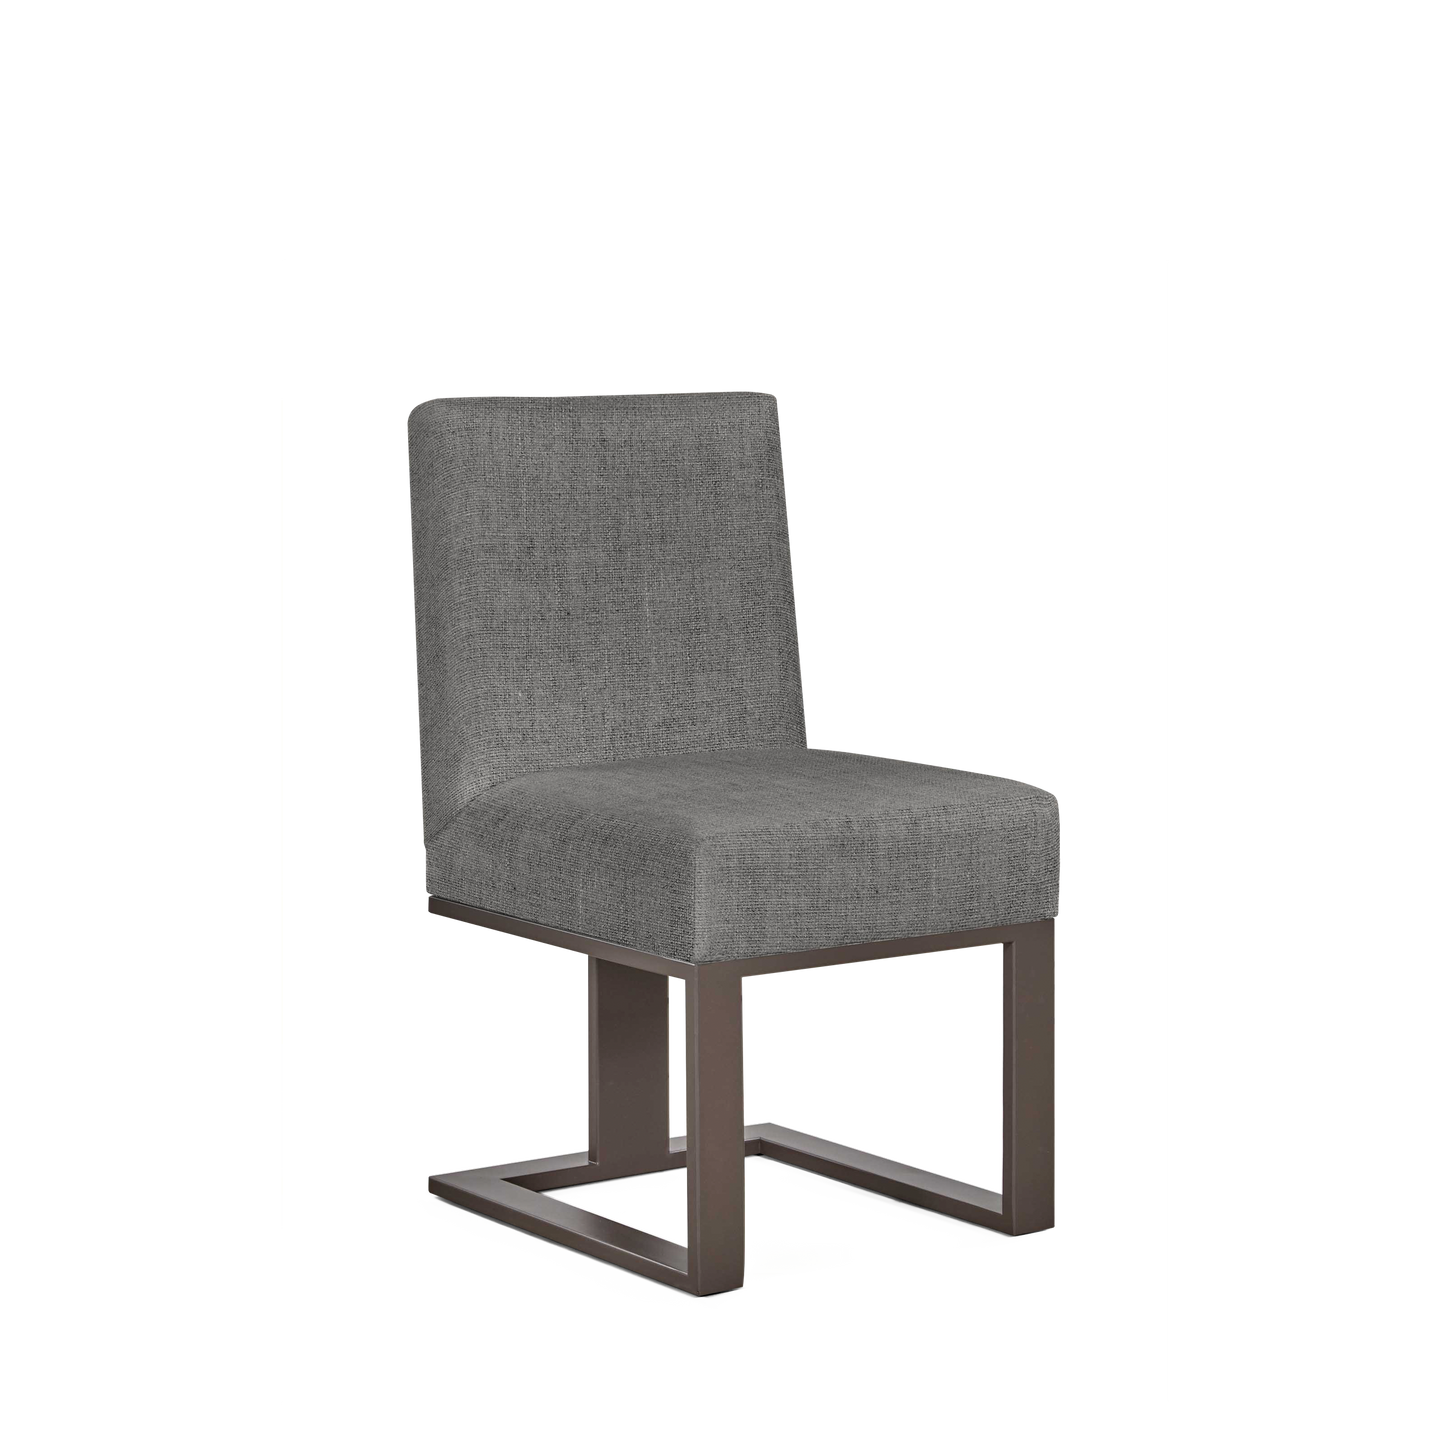 Len Chair with Rocco dark grey textile and moka wood legs 